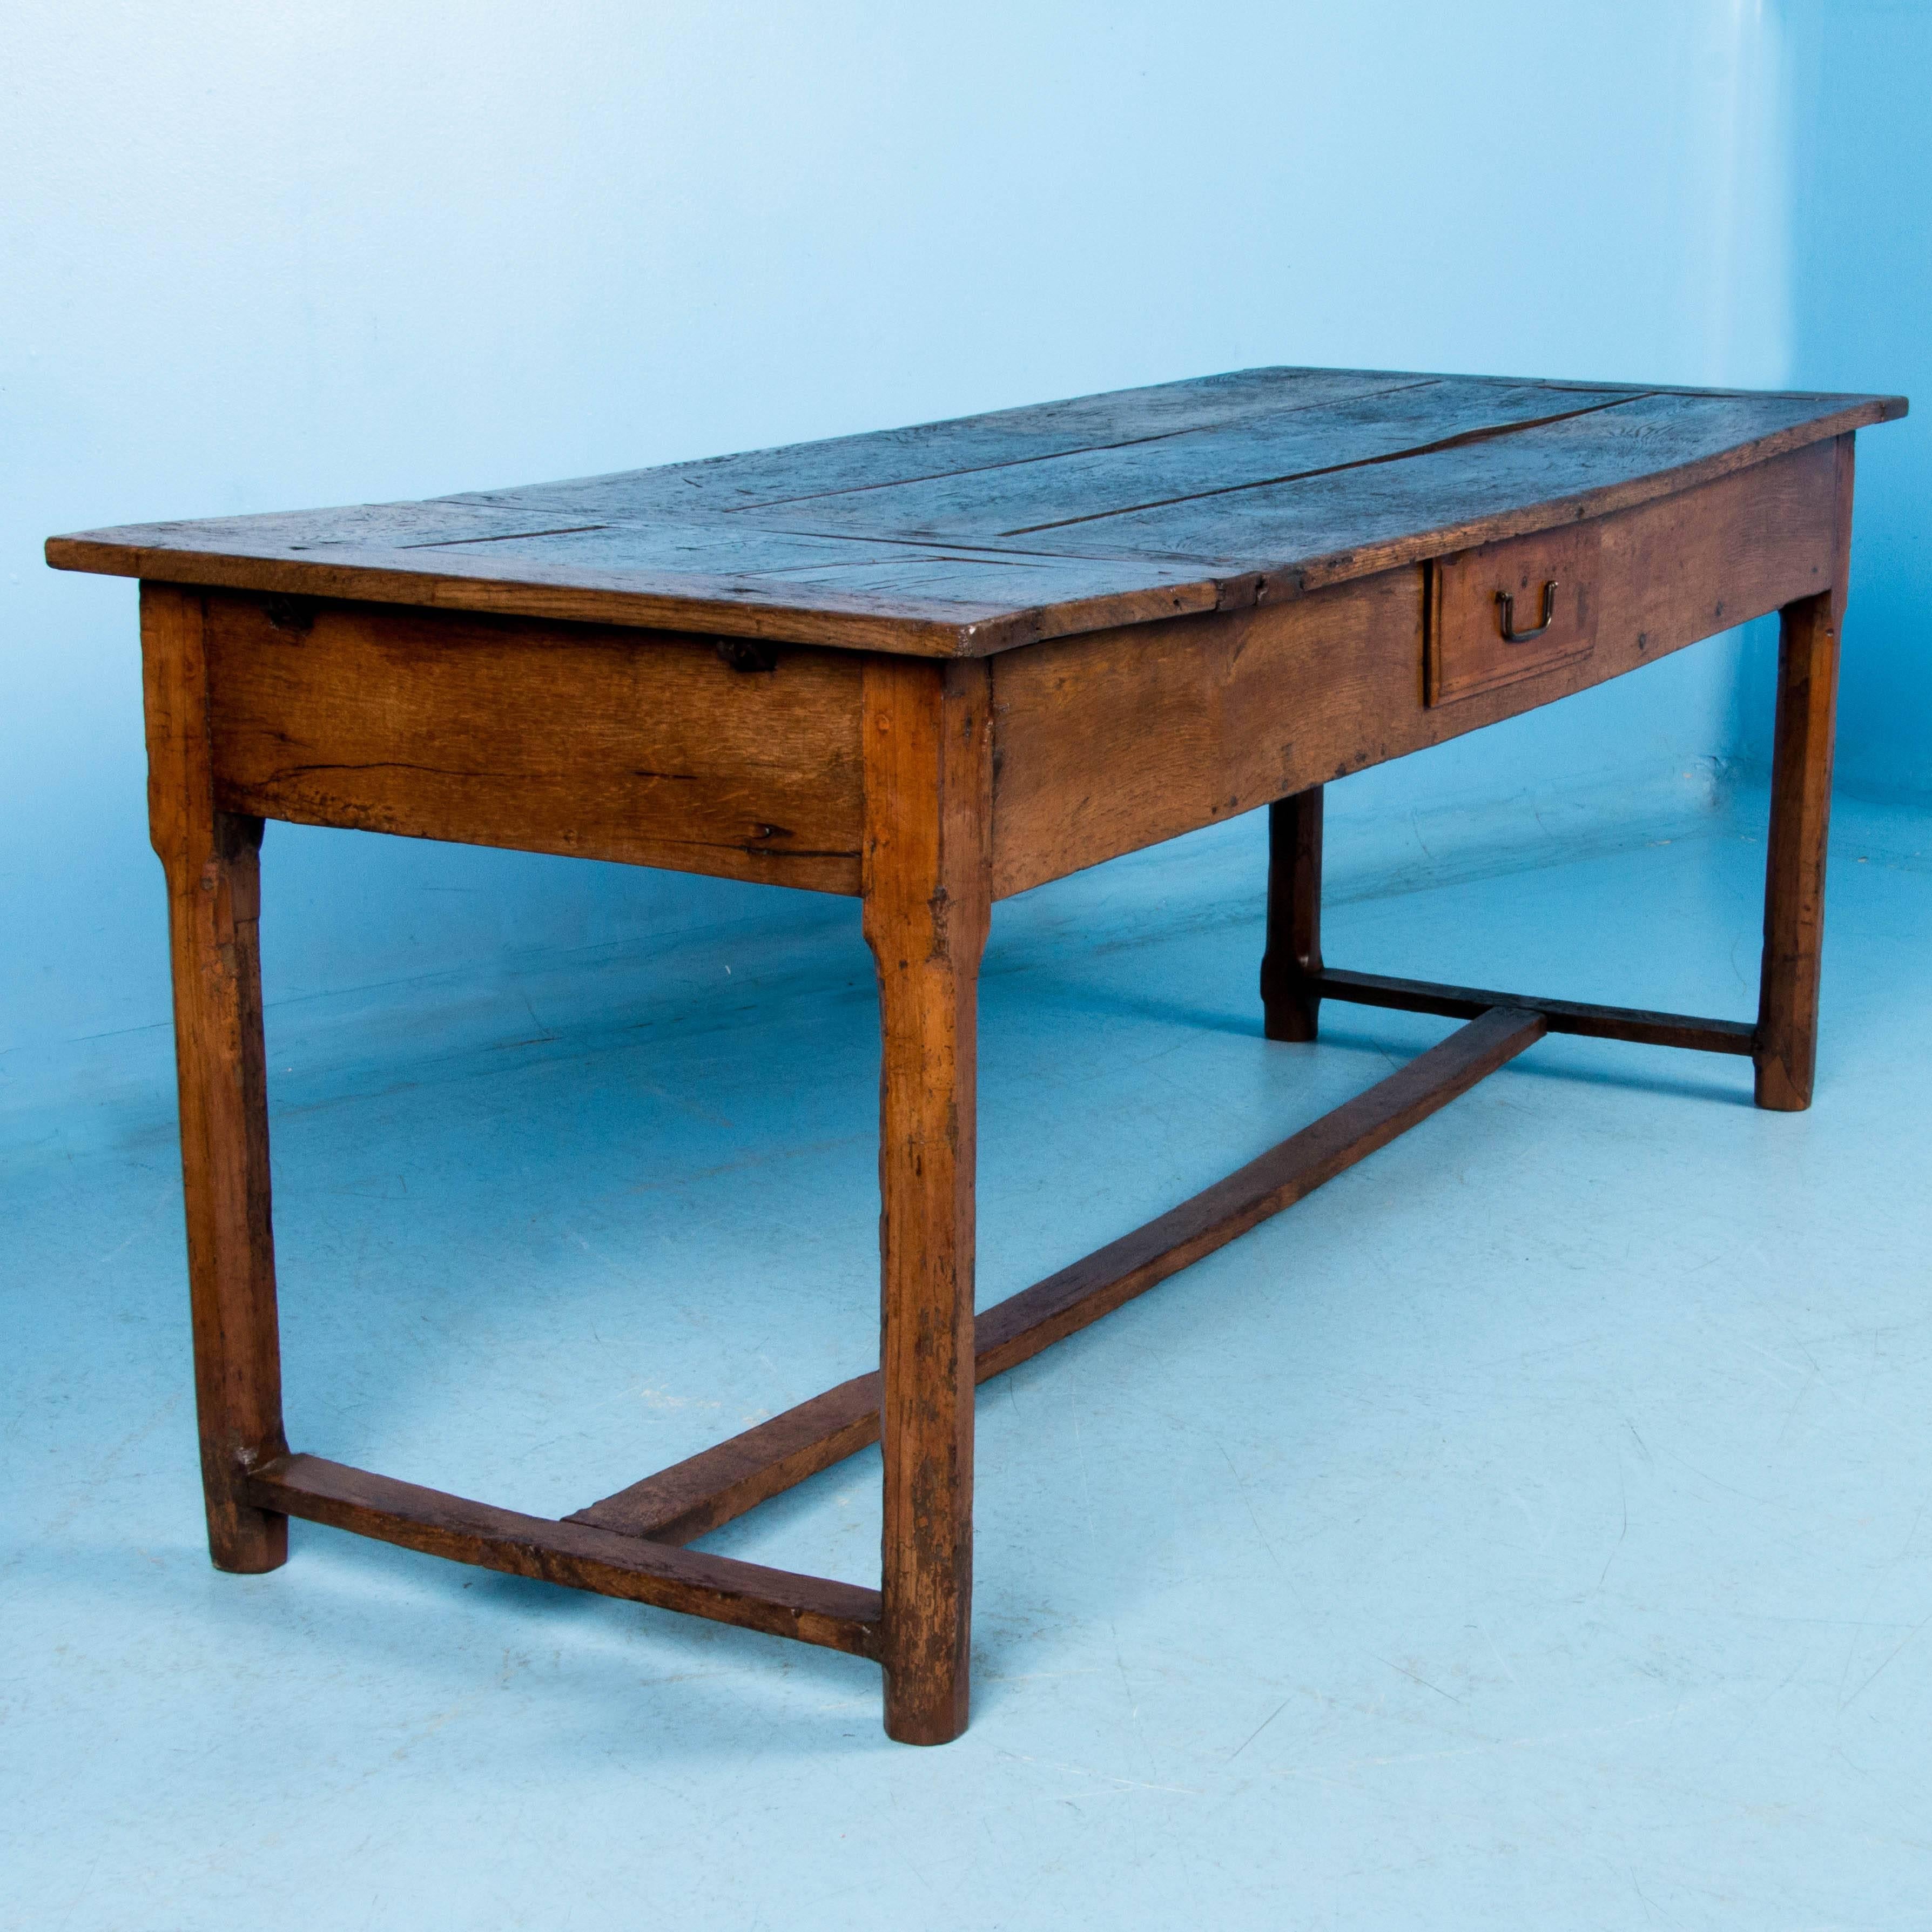 19th Century Antique English Country Oak Farm Table with Unique Storage